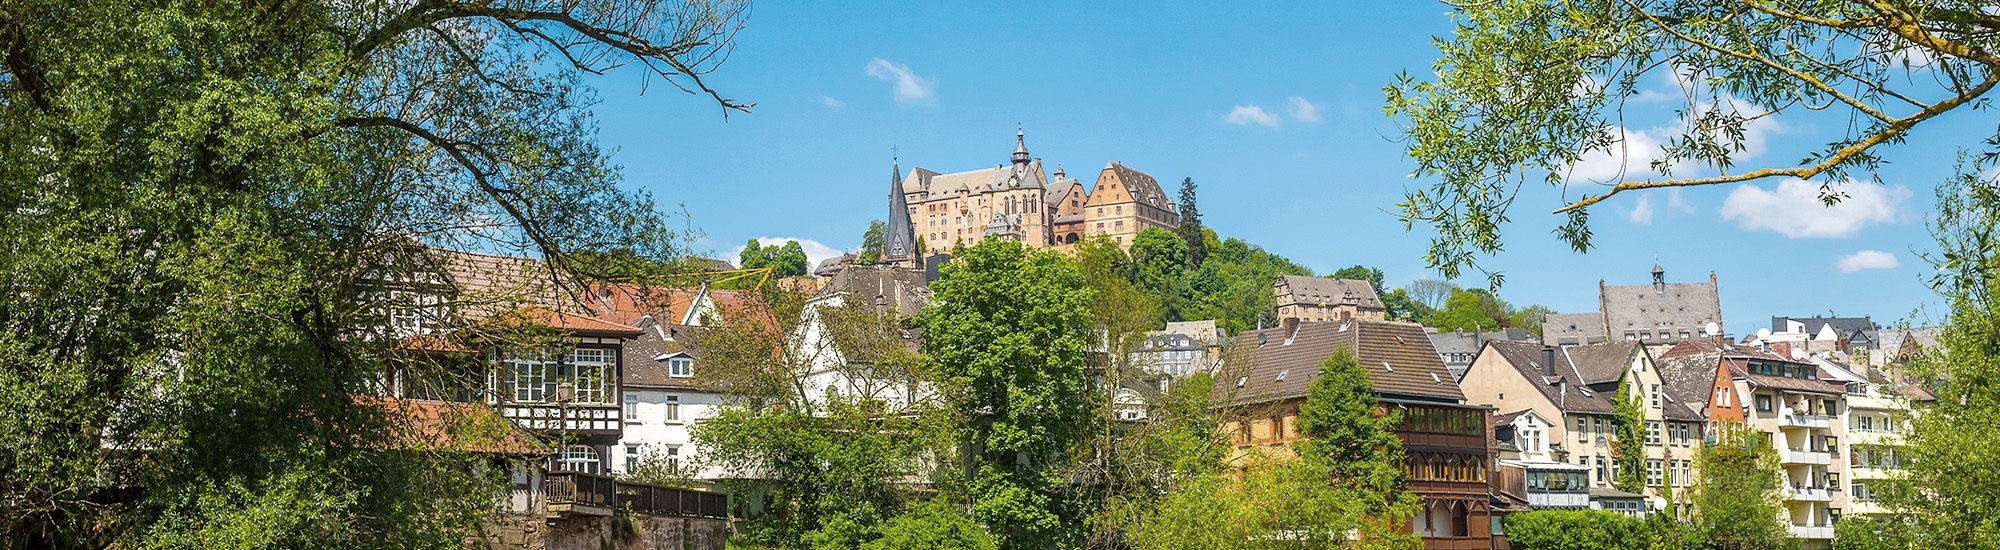 Immobilien Marburg